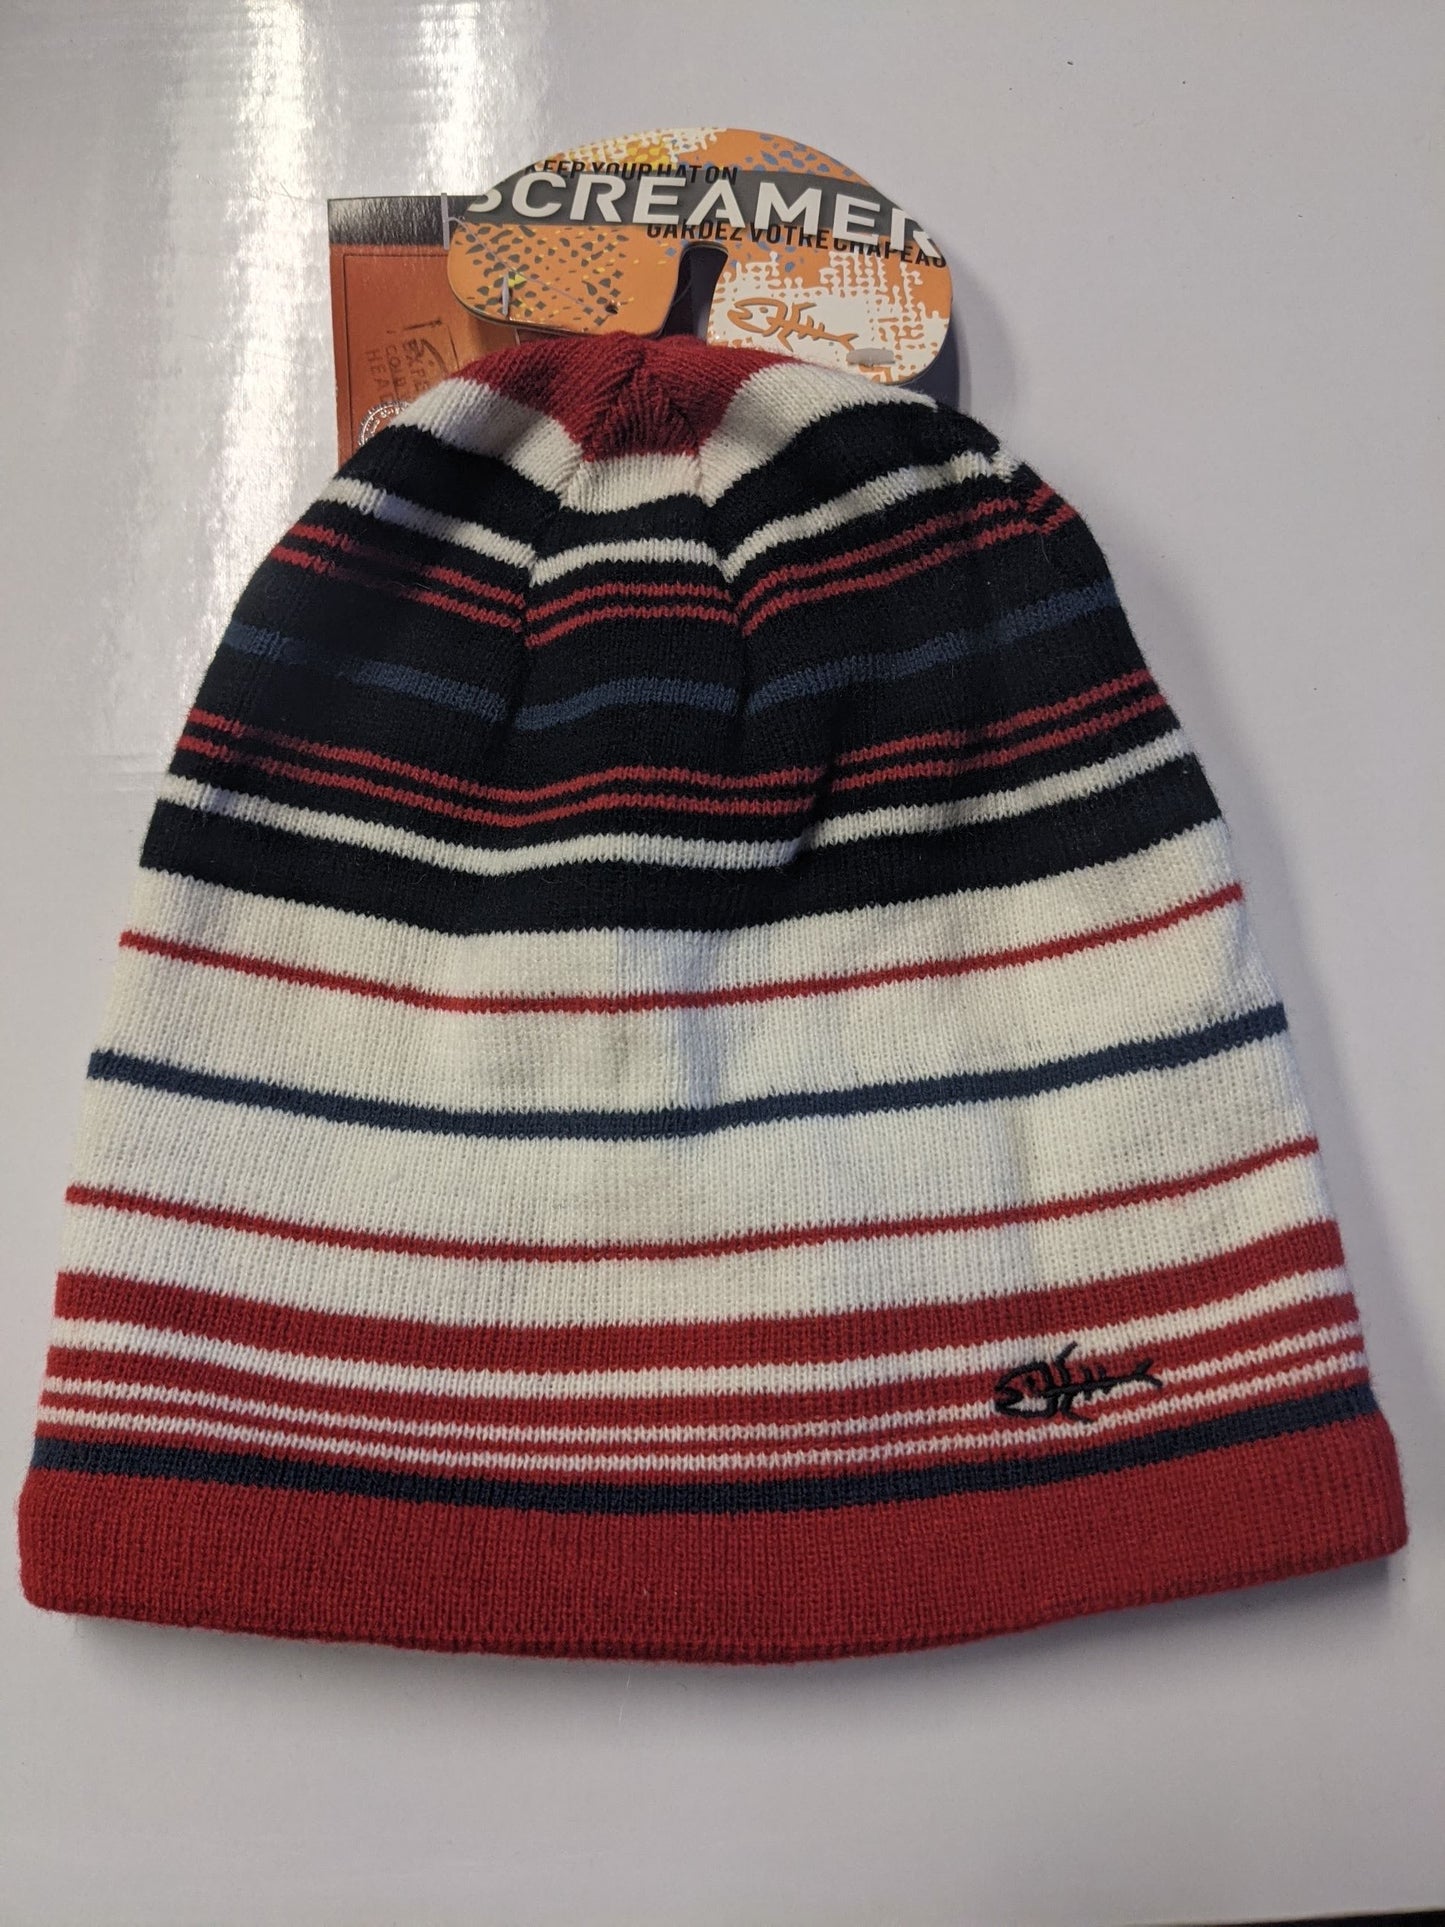 Screamer Winter Hat, One Size, Multicolored, New